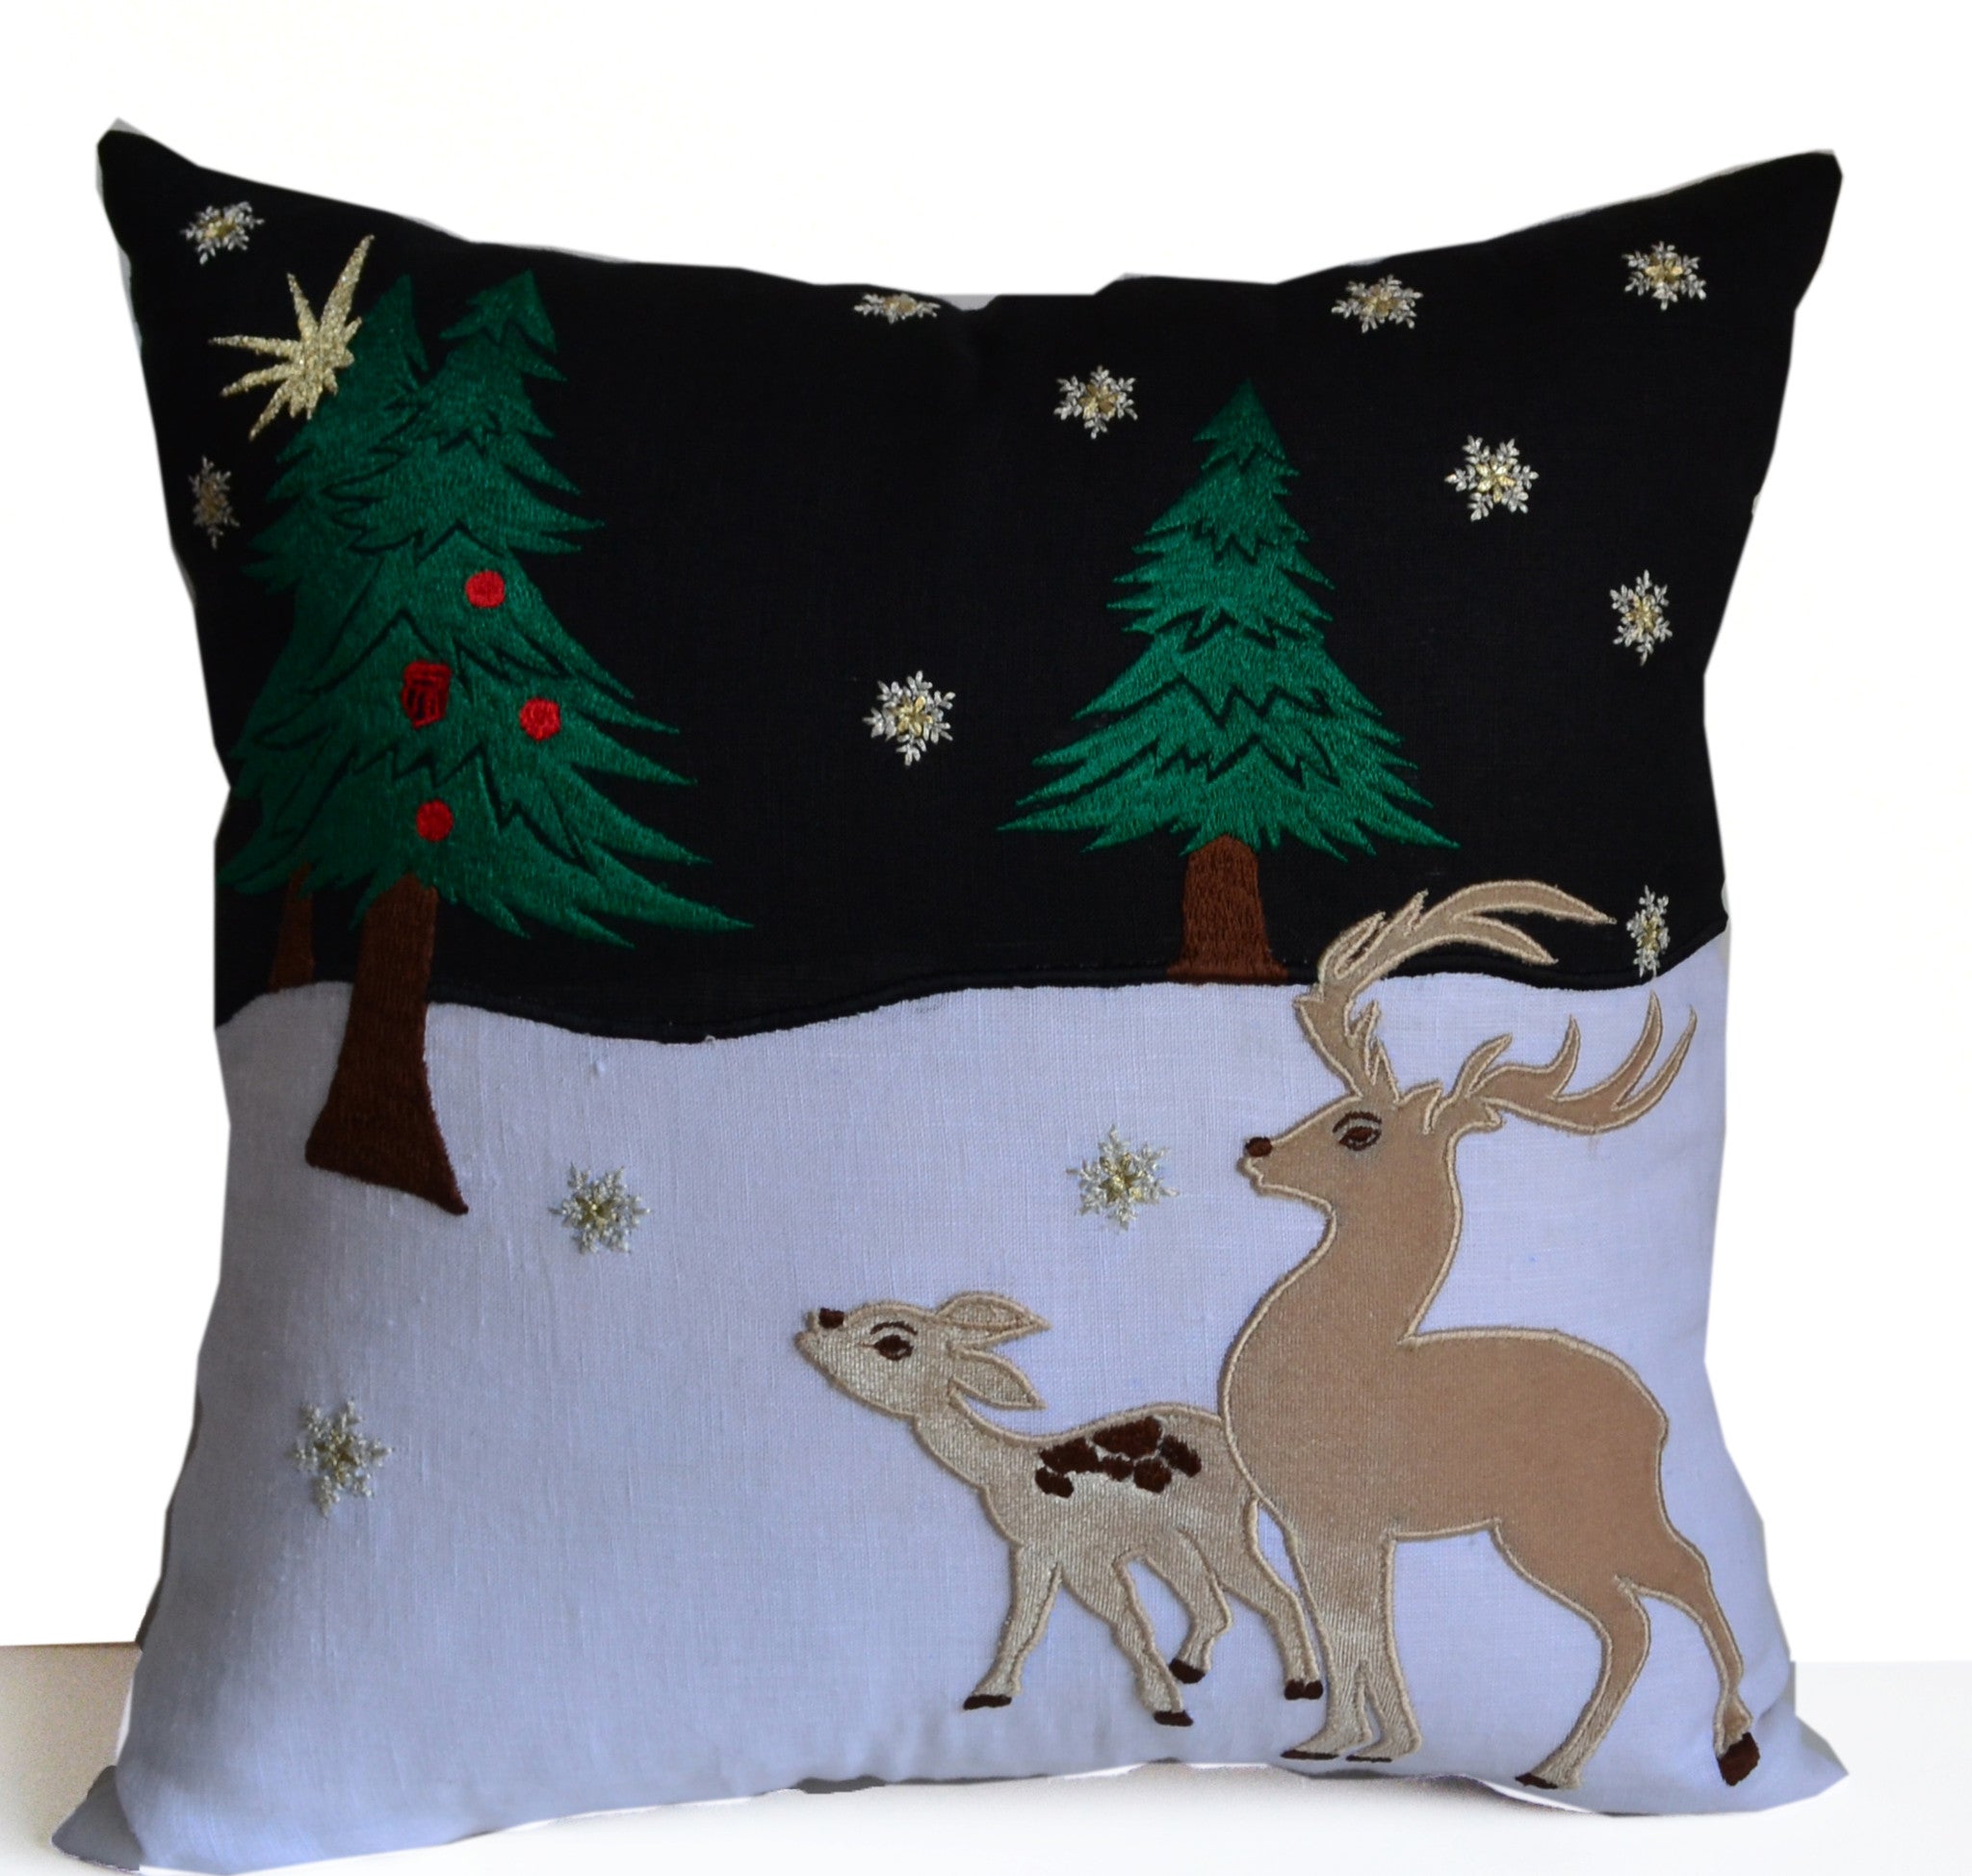 Handmade customized reindeer Christmas pillows